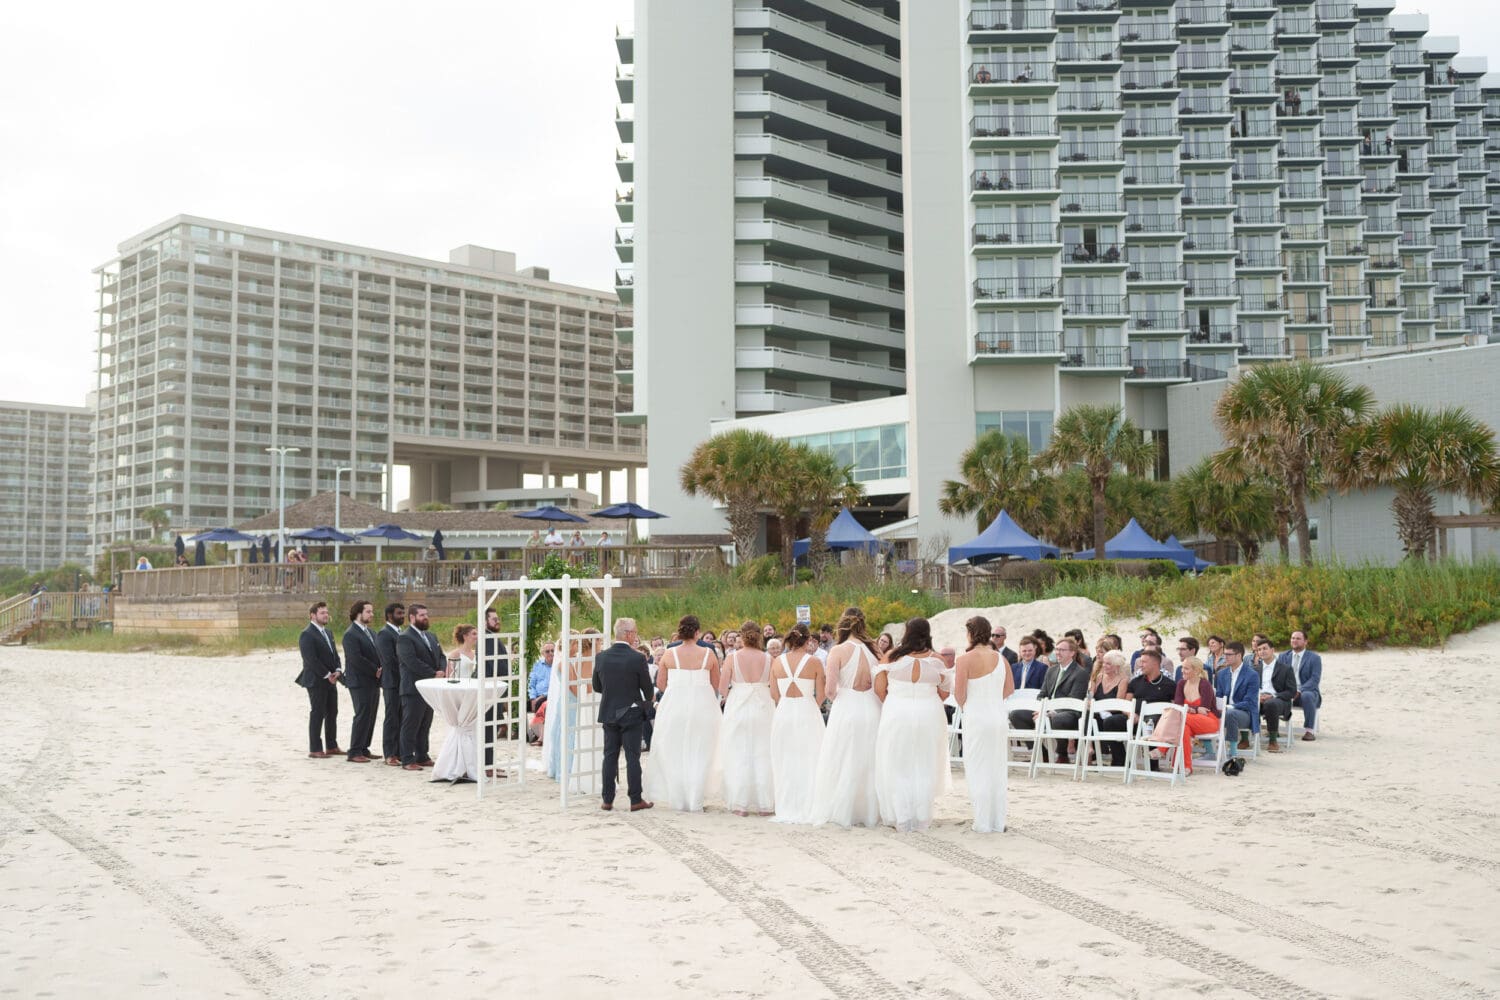 Ceremony behind the hilton - Hilton Myrtle Beach Resort